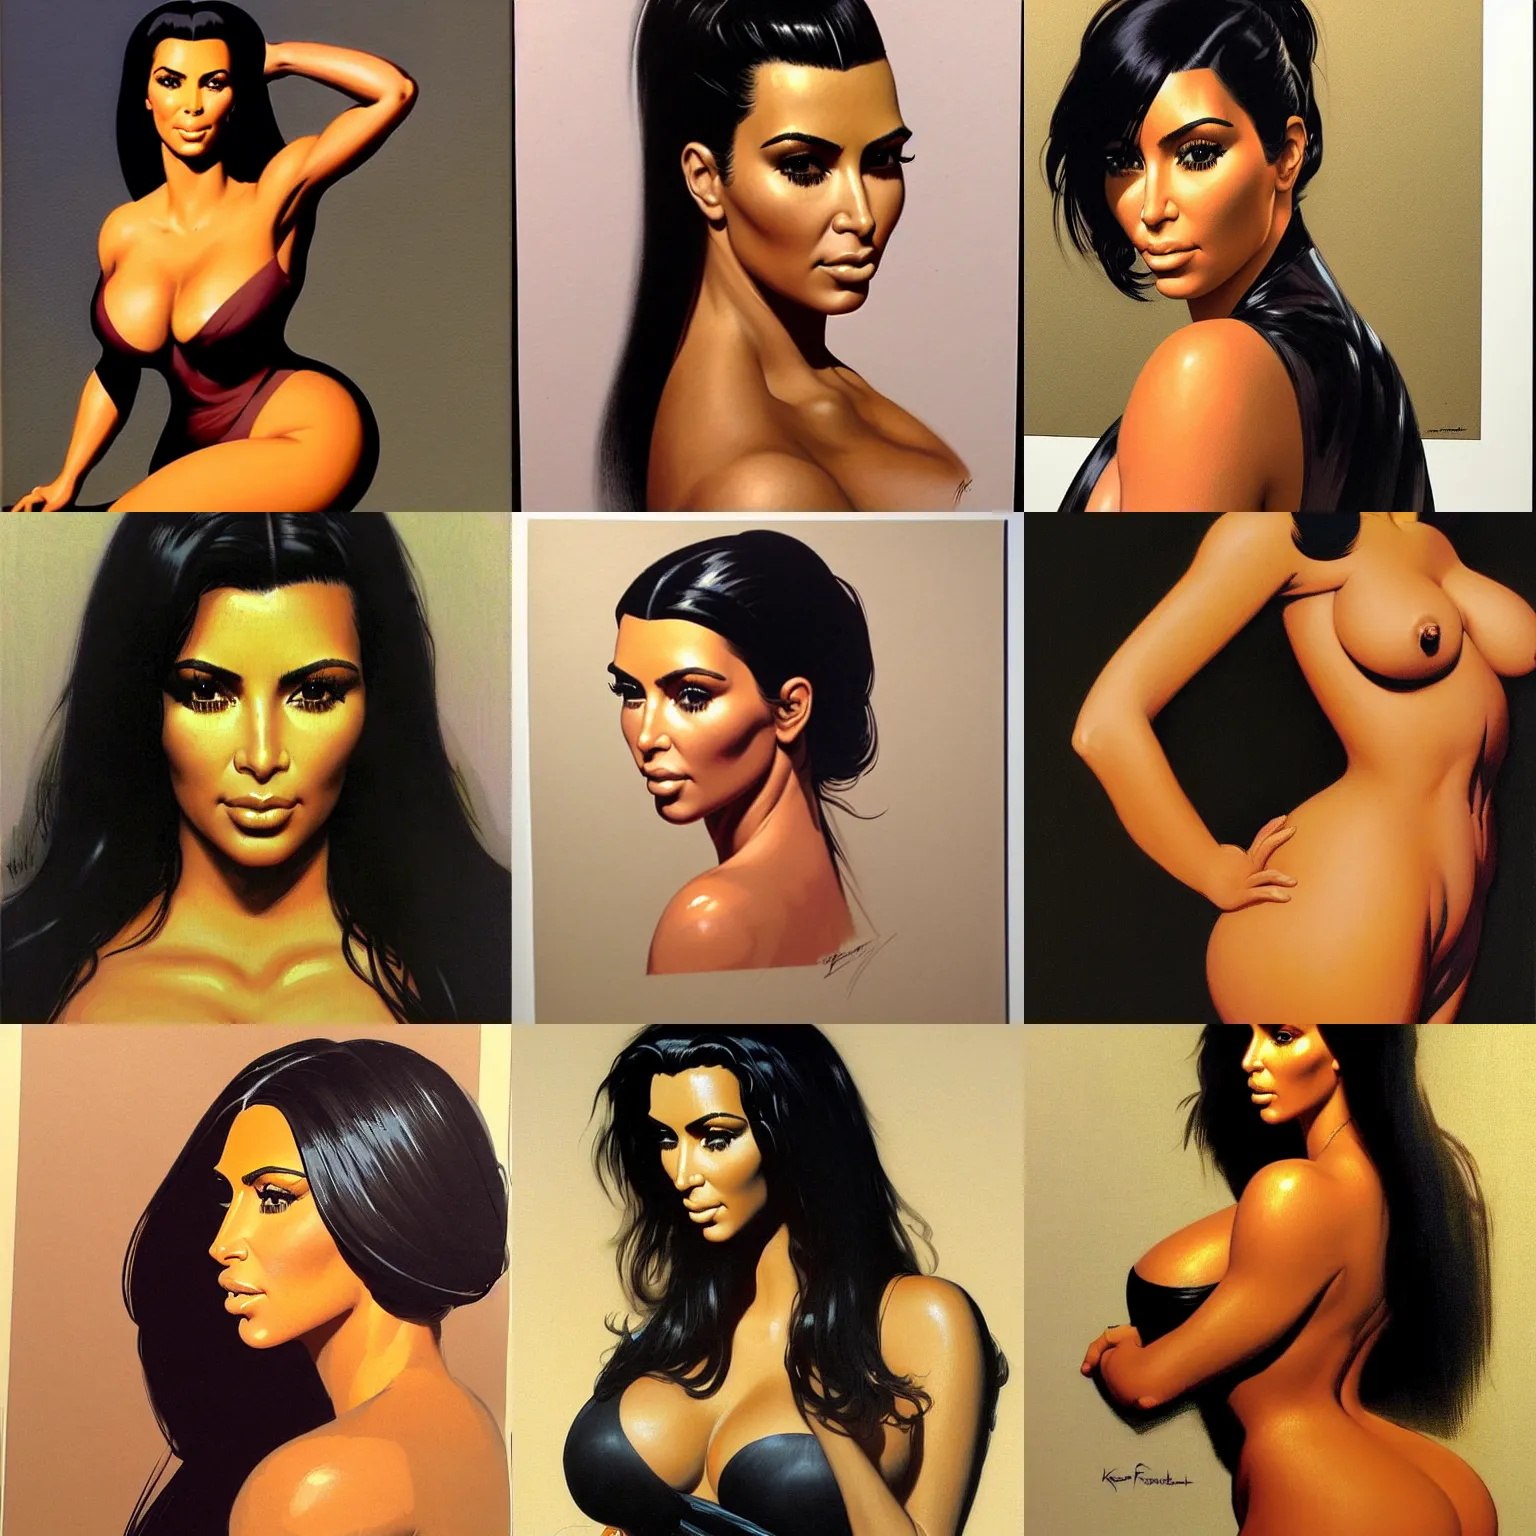 Prompt: detailed portrait of kim kardashian by syd mead, frank frazetta, ken kelly, simon bisley, richard corben, william - adolphe bouguereau